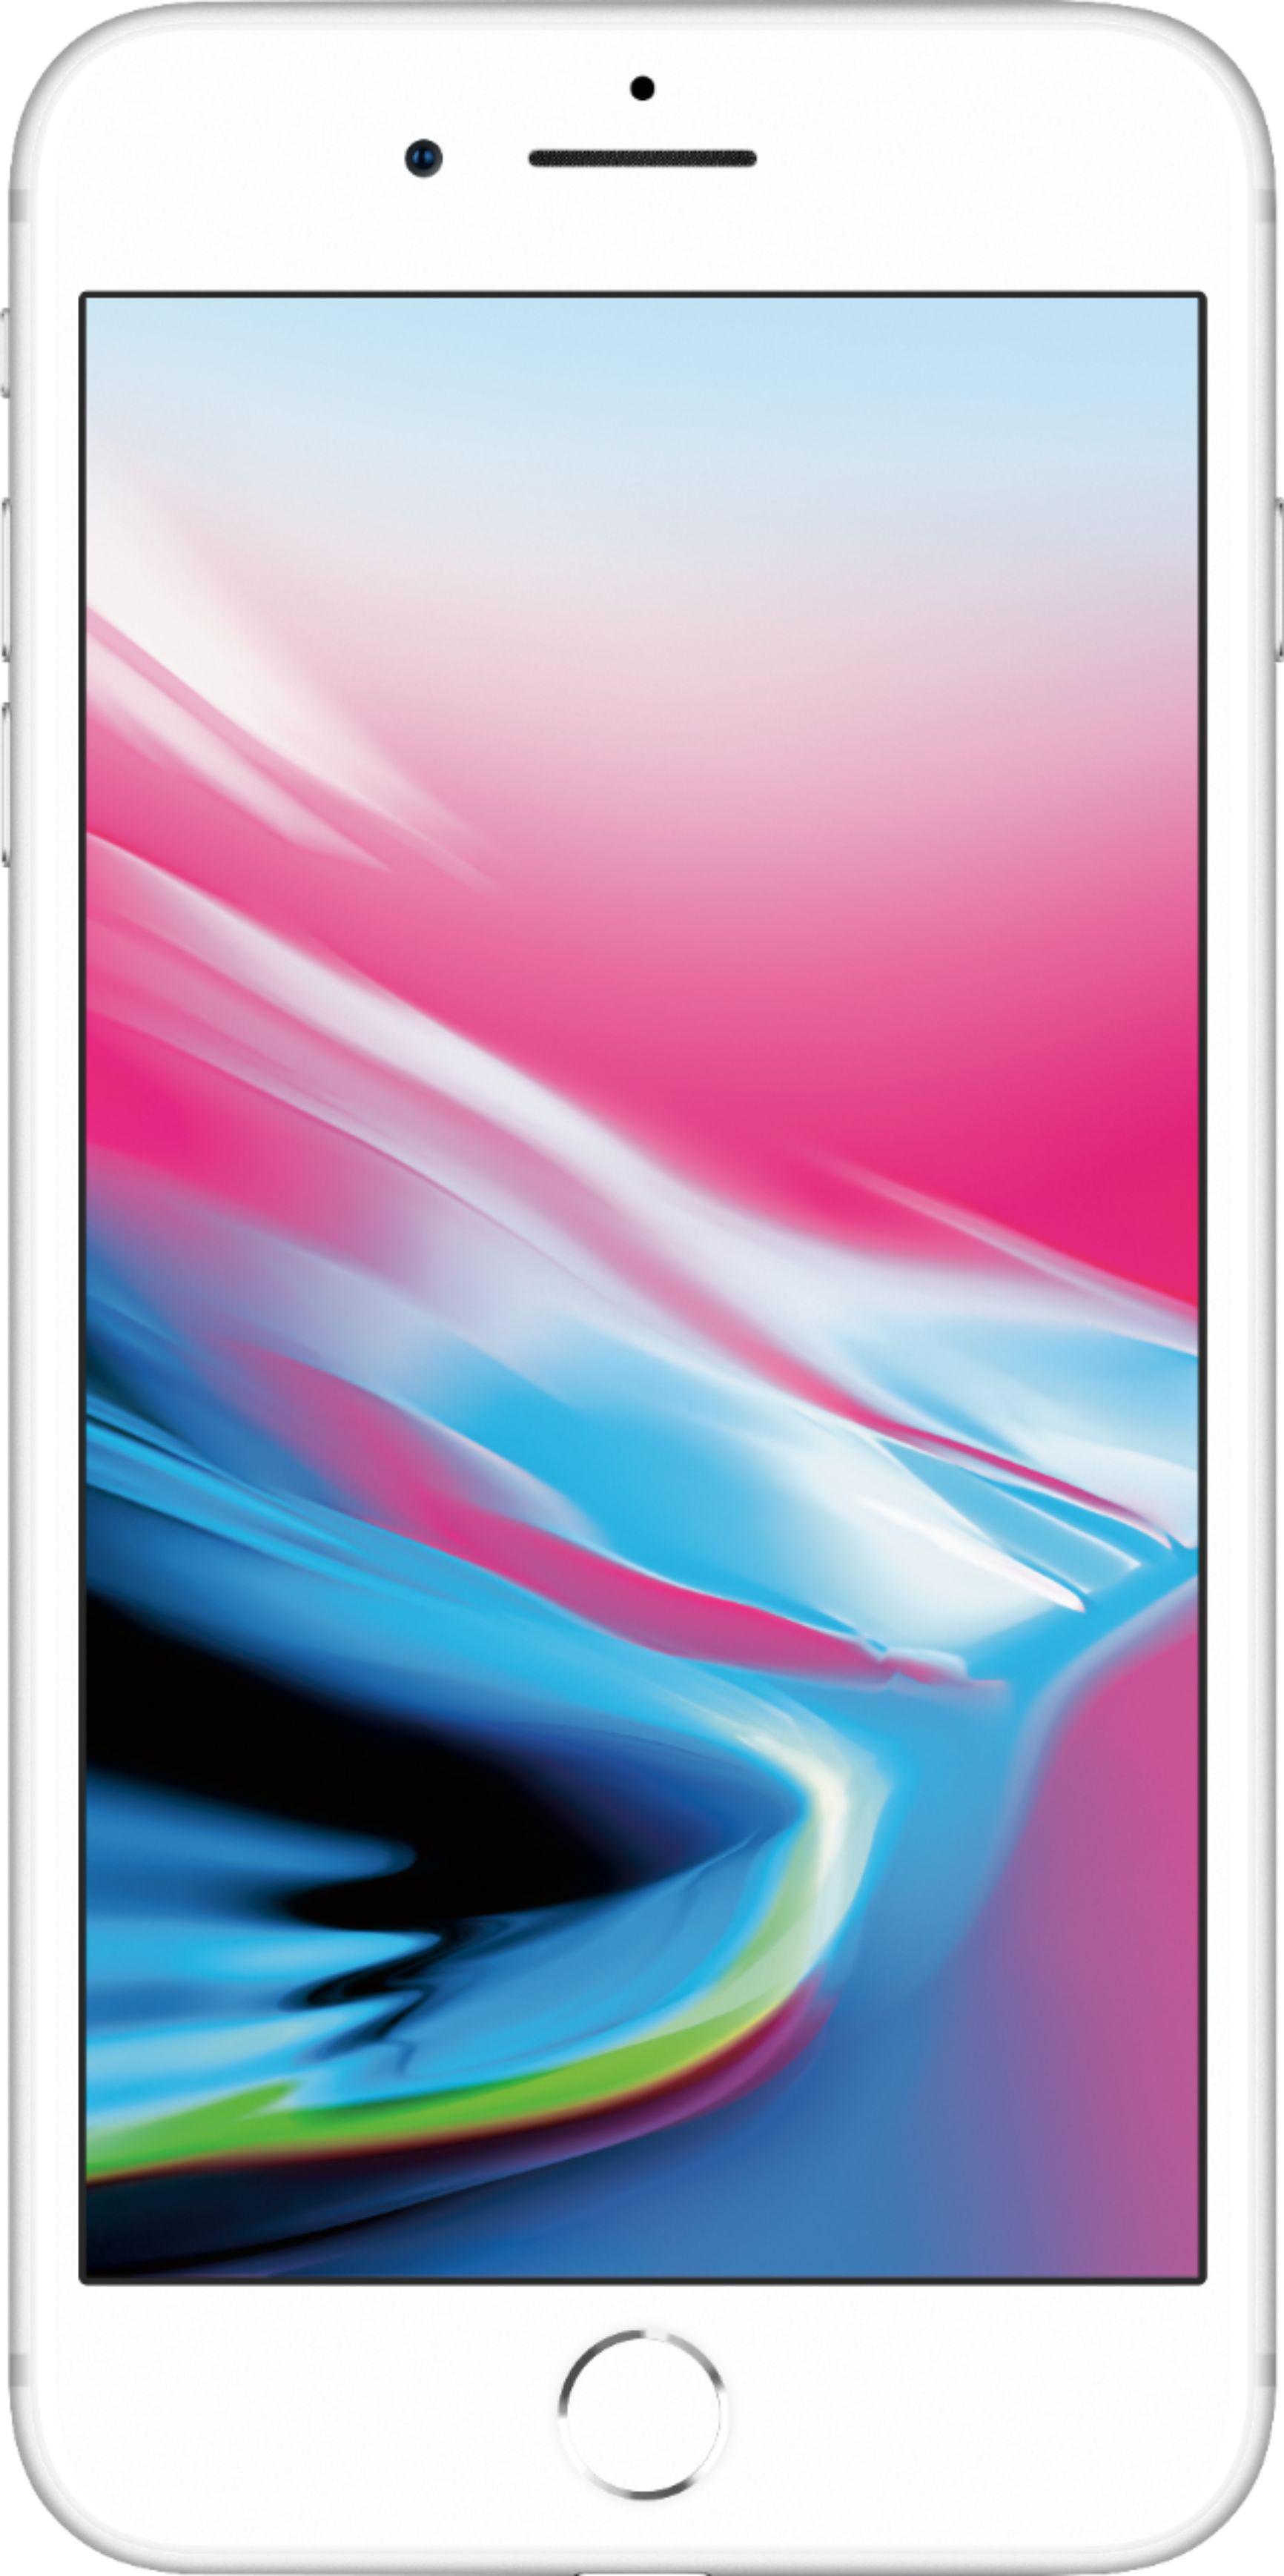 Apple iPhone 8 Plus 256GB Silver (Sprint) MQ8H2LL/A - Best Buy